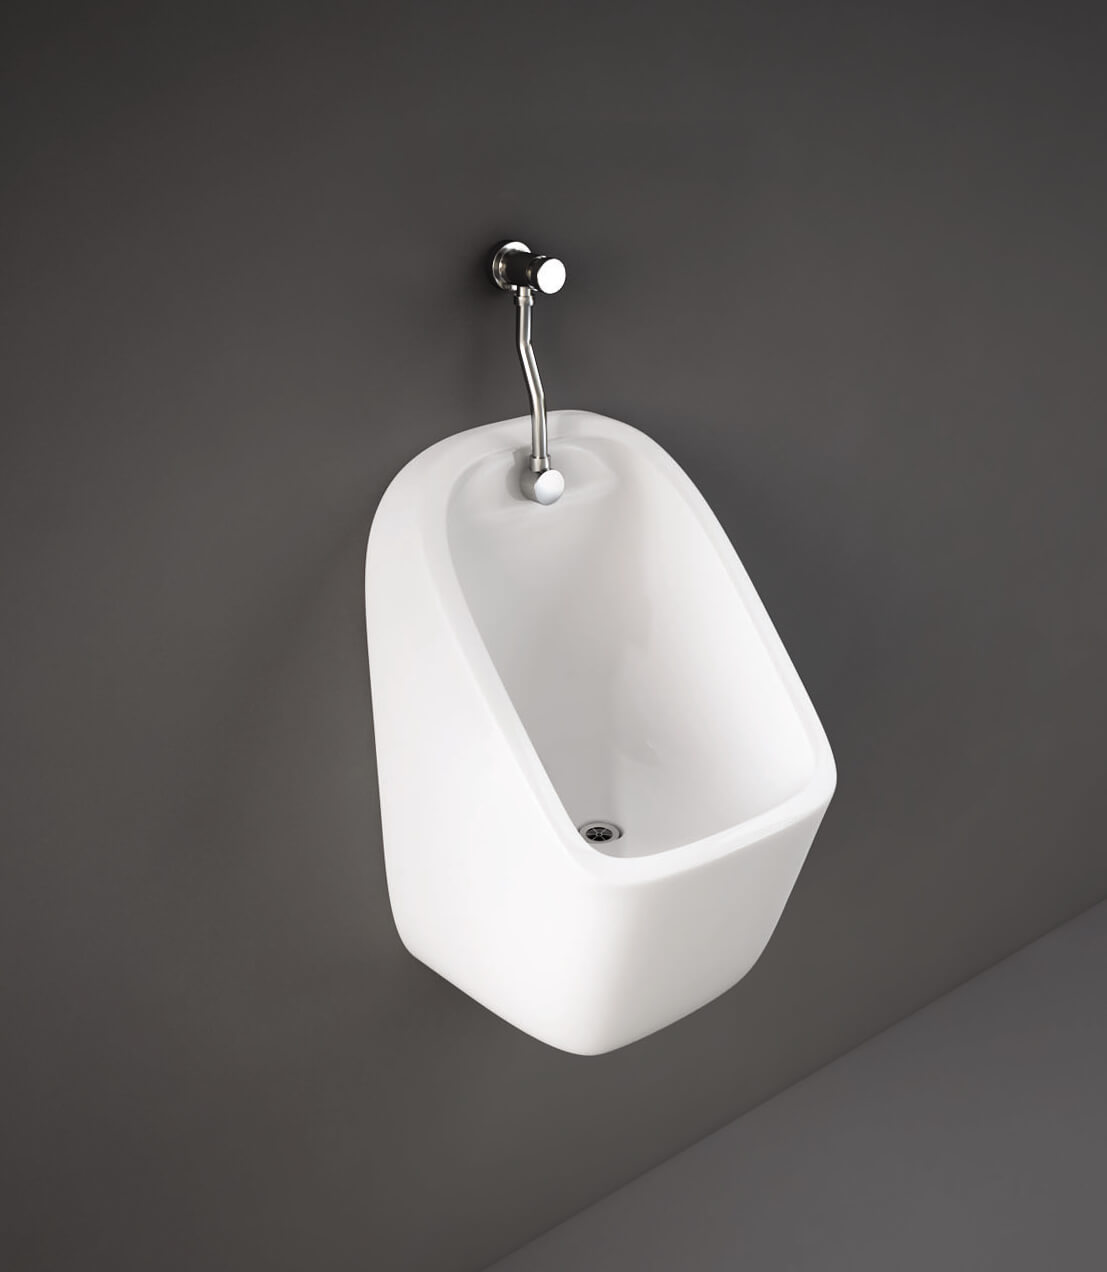 RAK Series 600 310 x 300 x 550mm White Urinal With Wall Brackets